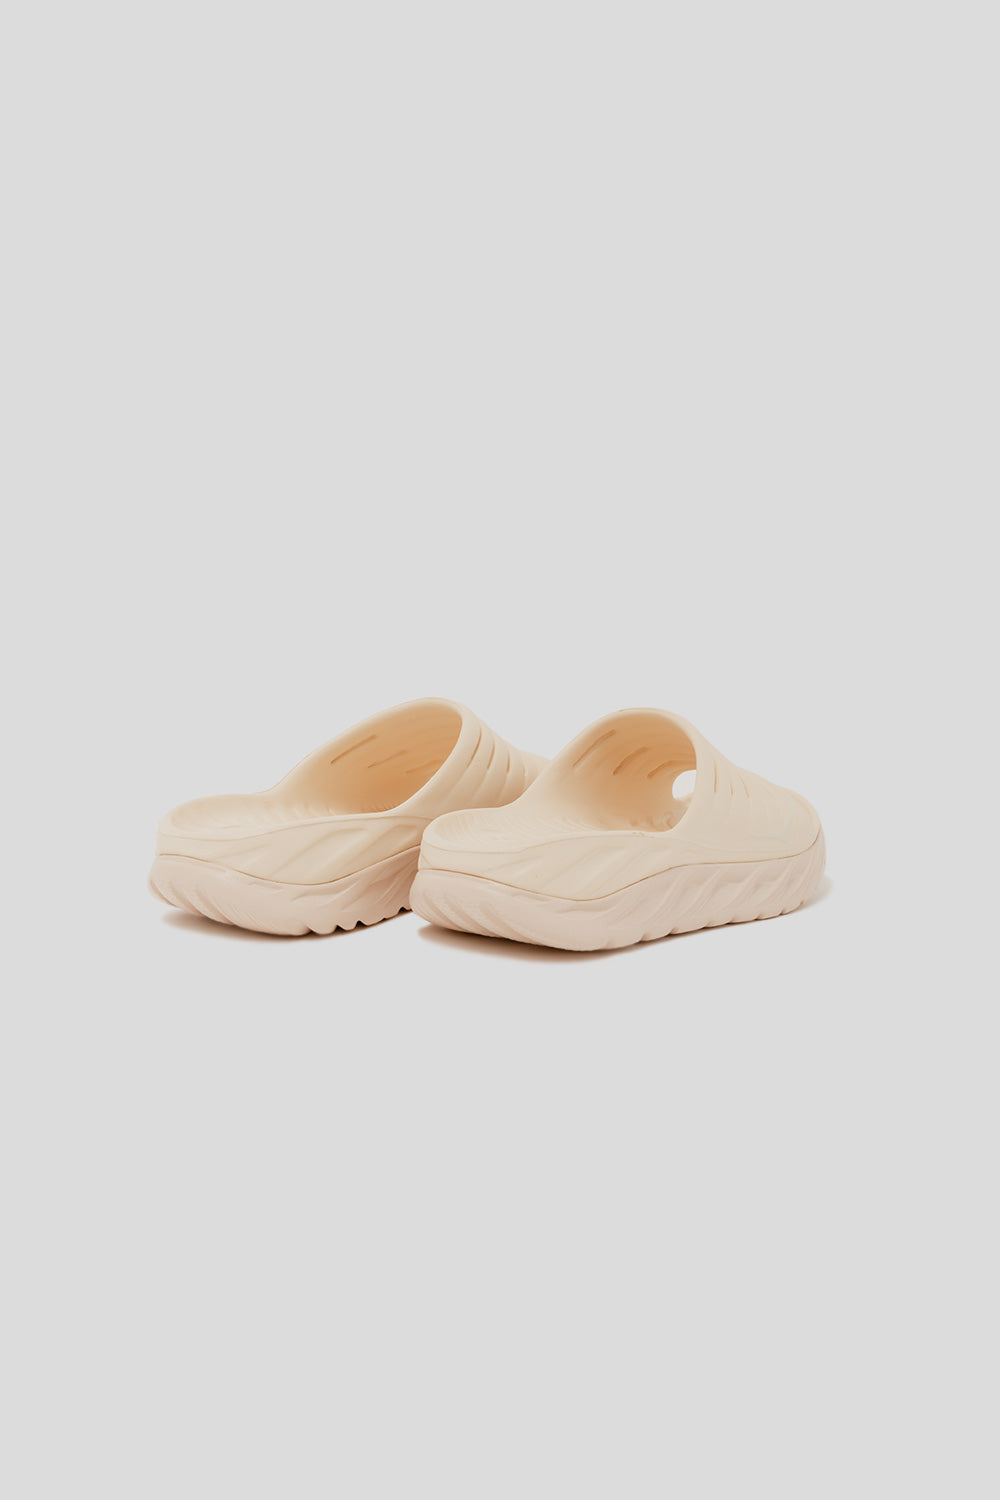 Hoka Ora Recovery Slide Sandal in Shortbread / Shifting Sand